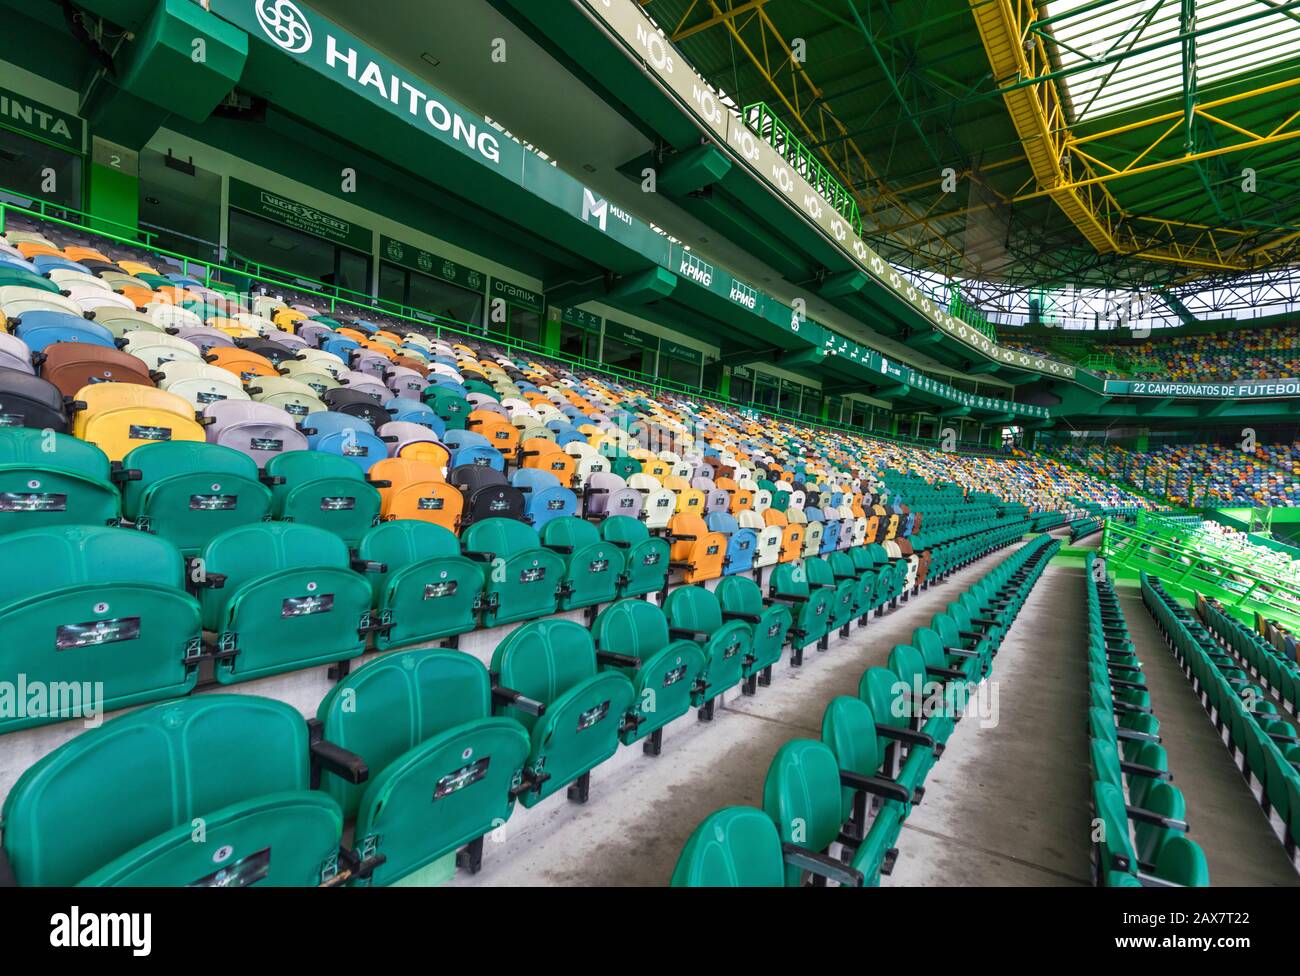 Farbenfrohe Sitze in der Jose Alvalade Arena Stockfoto